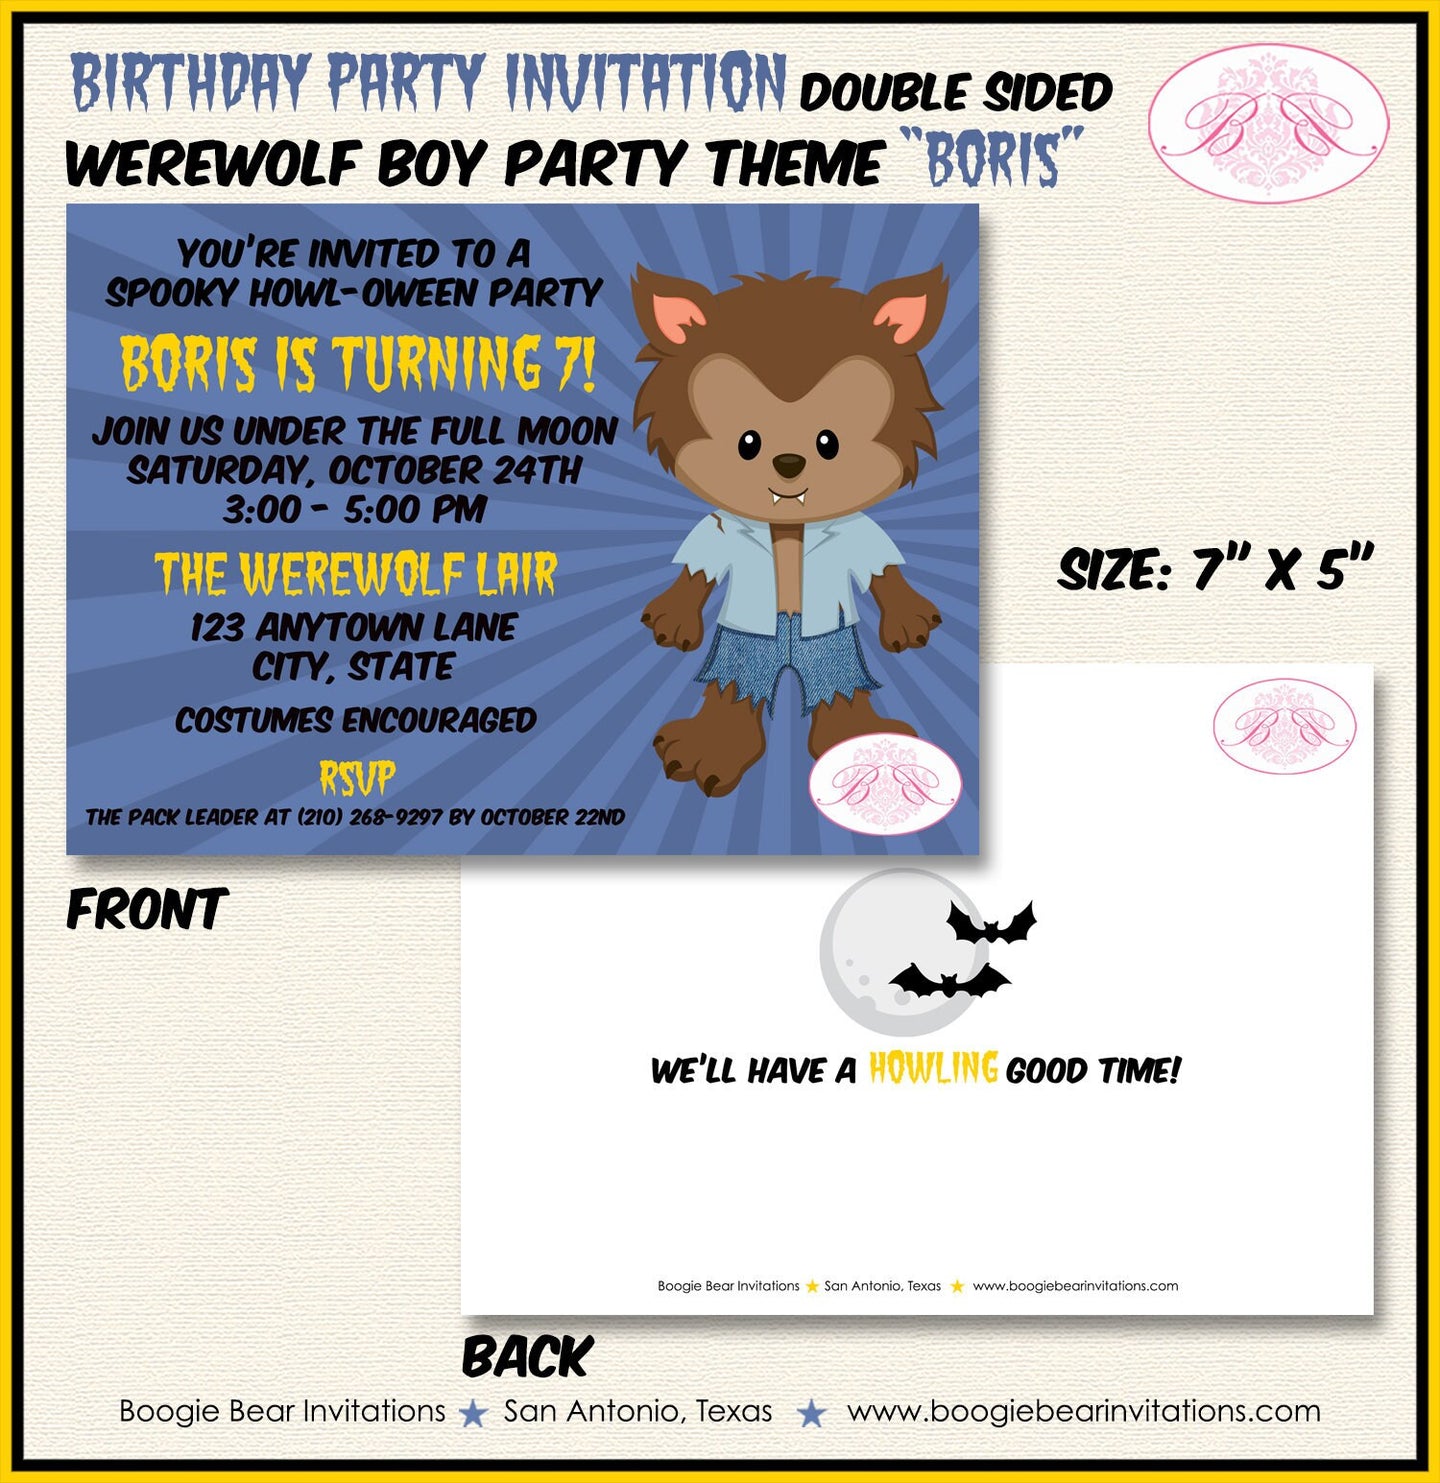 Werewolf Boy Birthday Party Invitation Halloween Full Moon Wolf Spooky Howl Boogie Bear Invitations Boris Theme Paperless Printable Printed